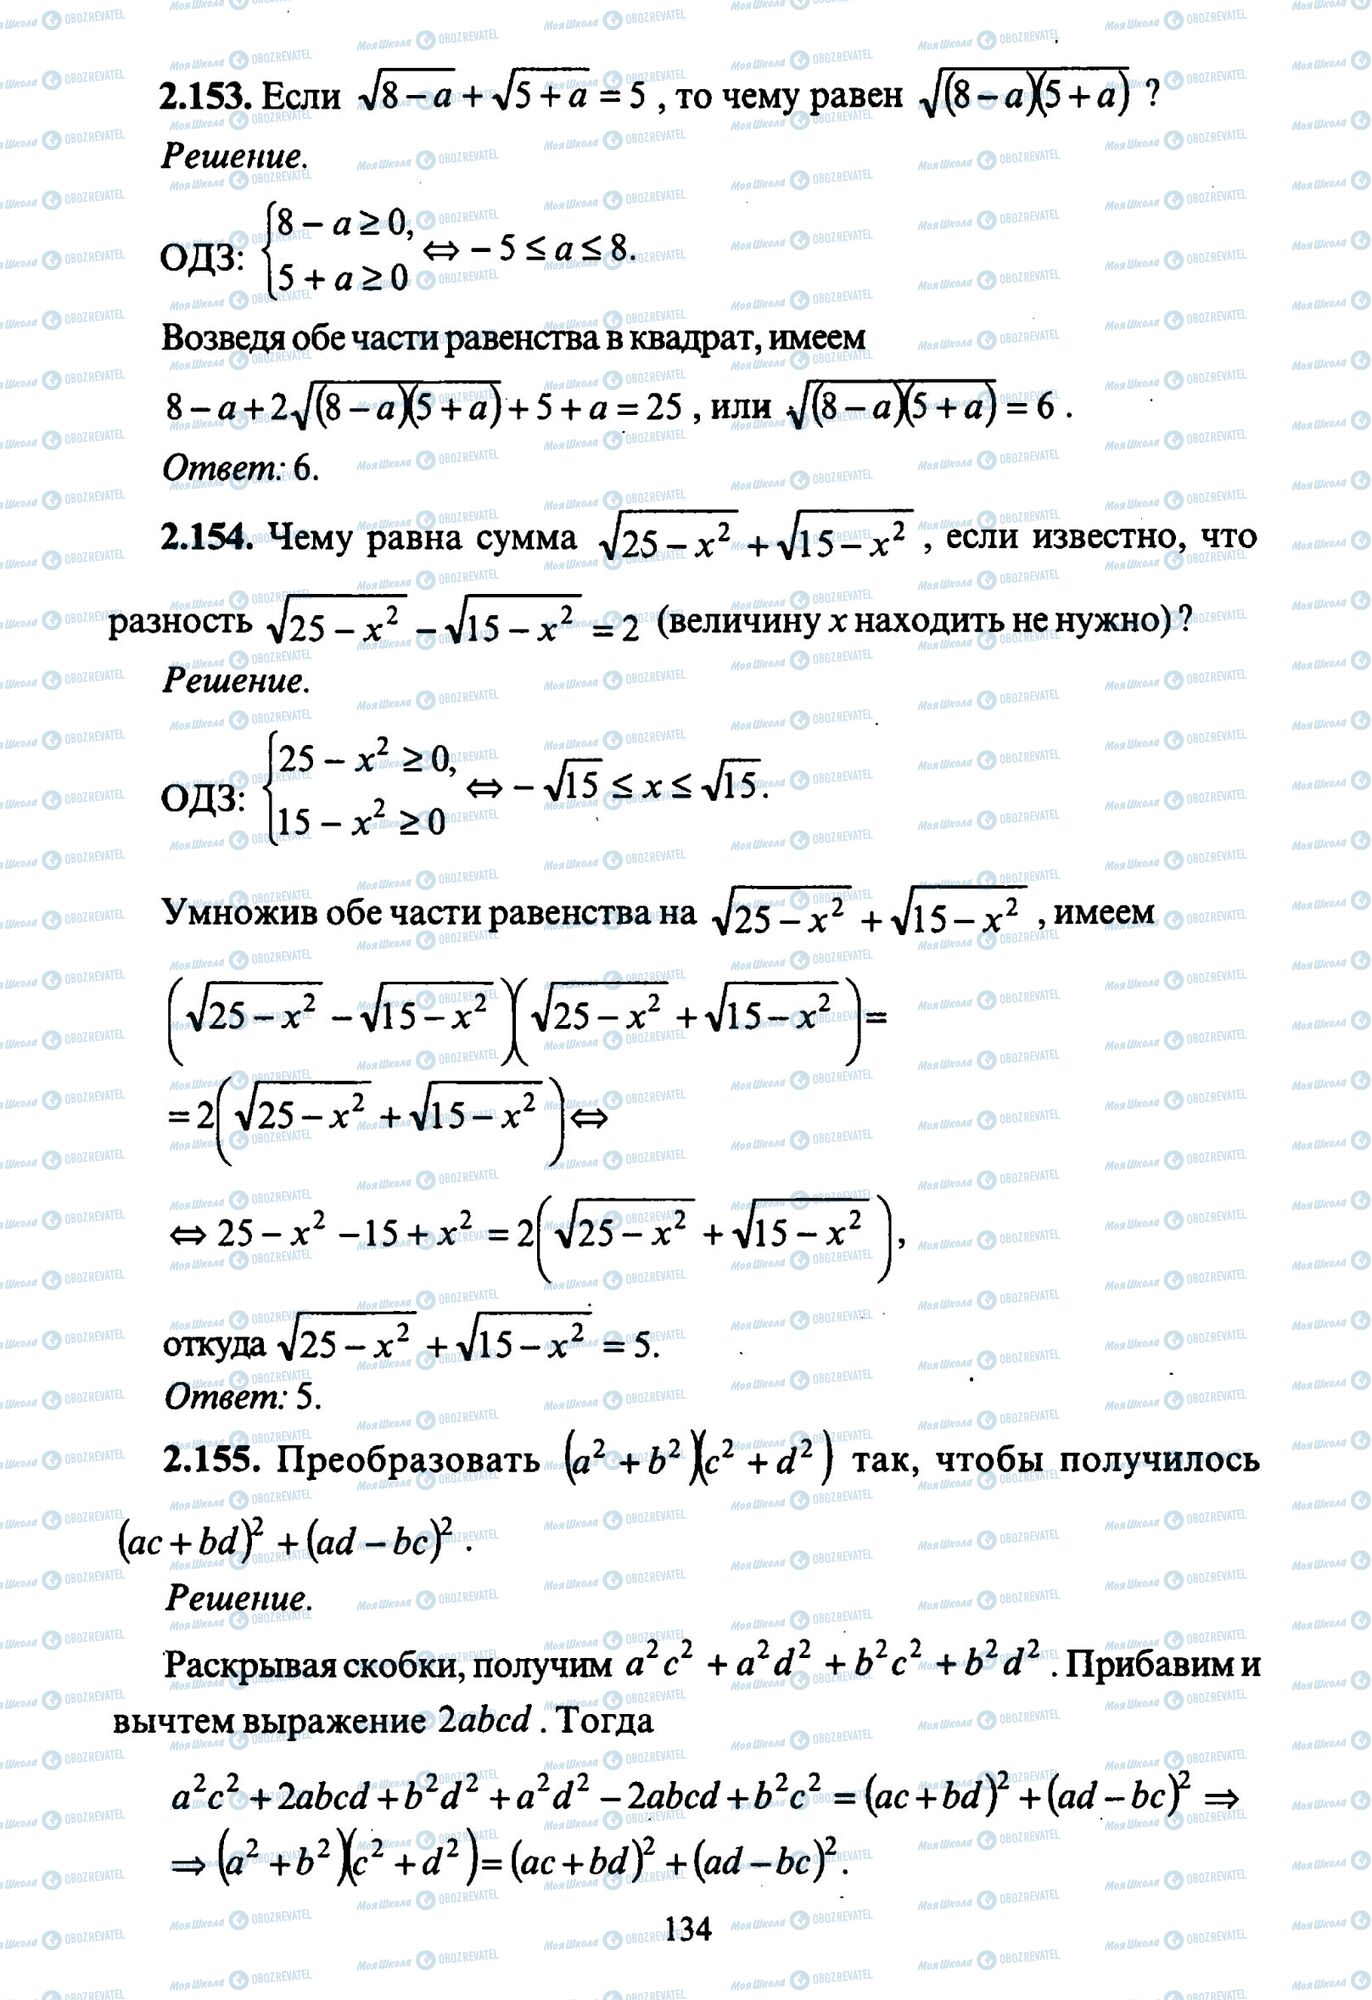 ЗНО Математика 11 класс страница 153-155